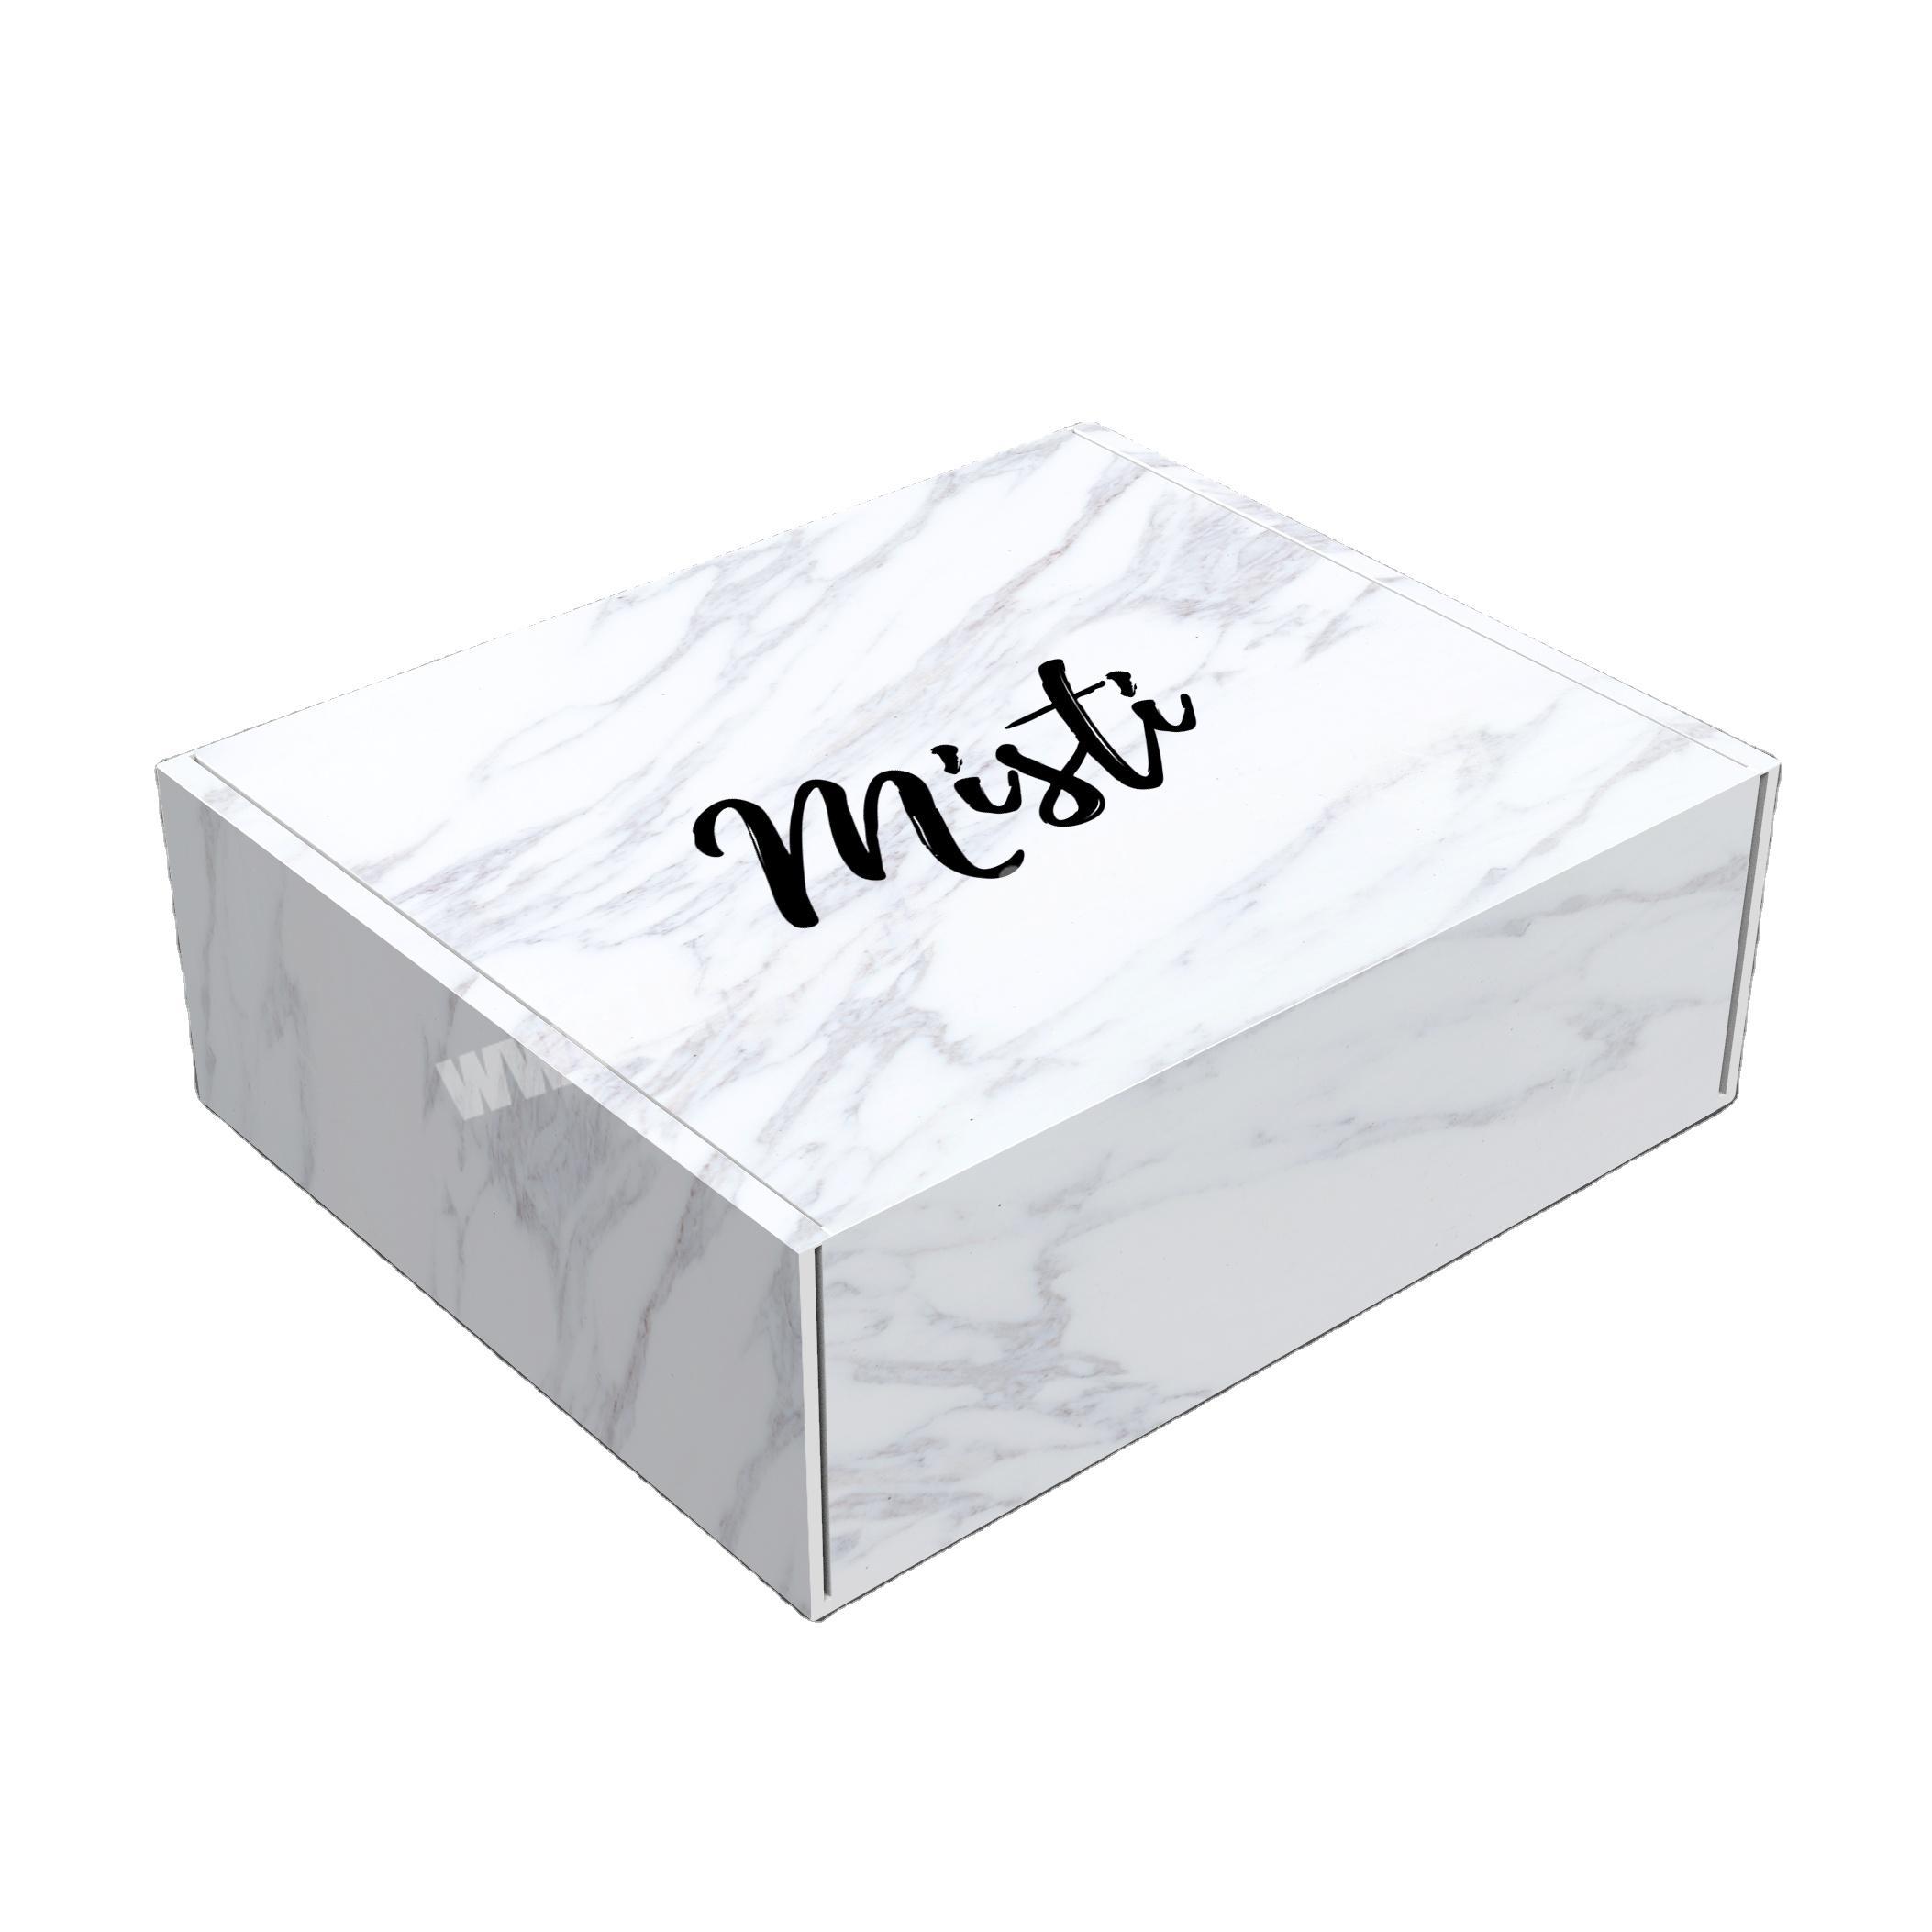 Custom printed corrugated board packaging mailer box for apparel dress